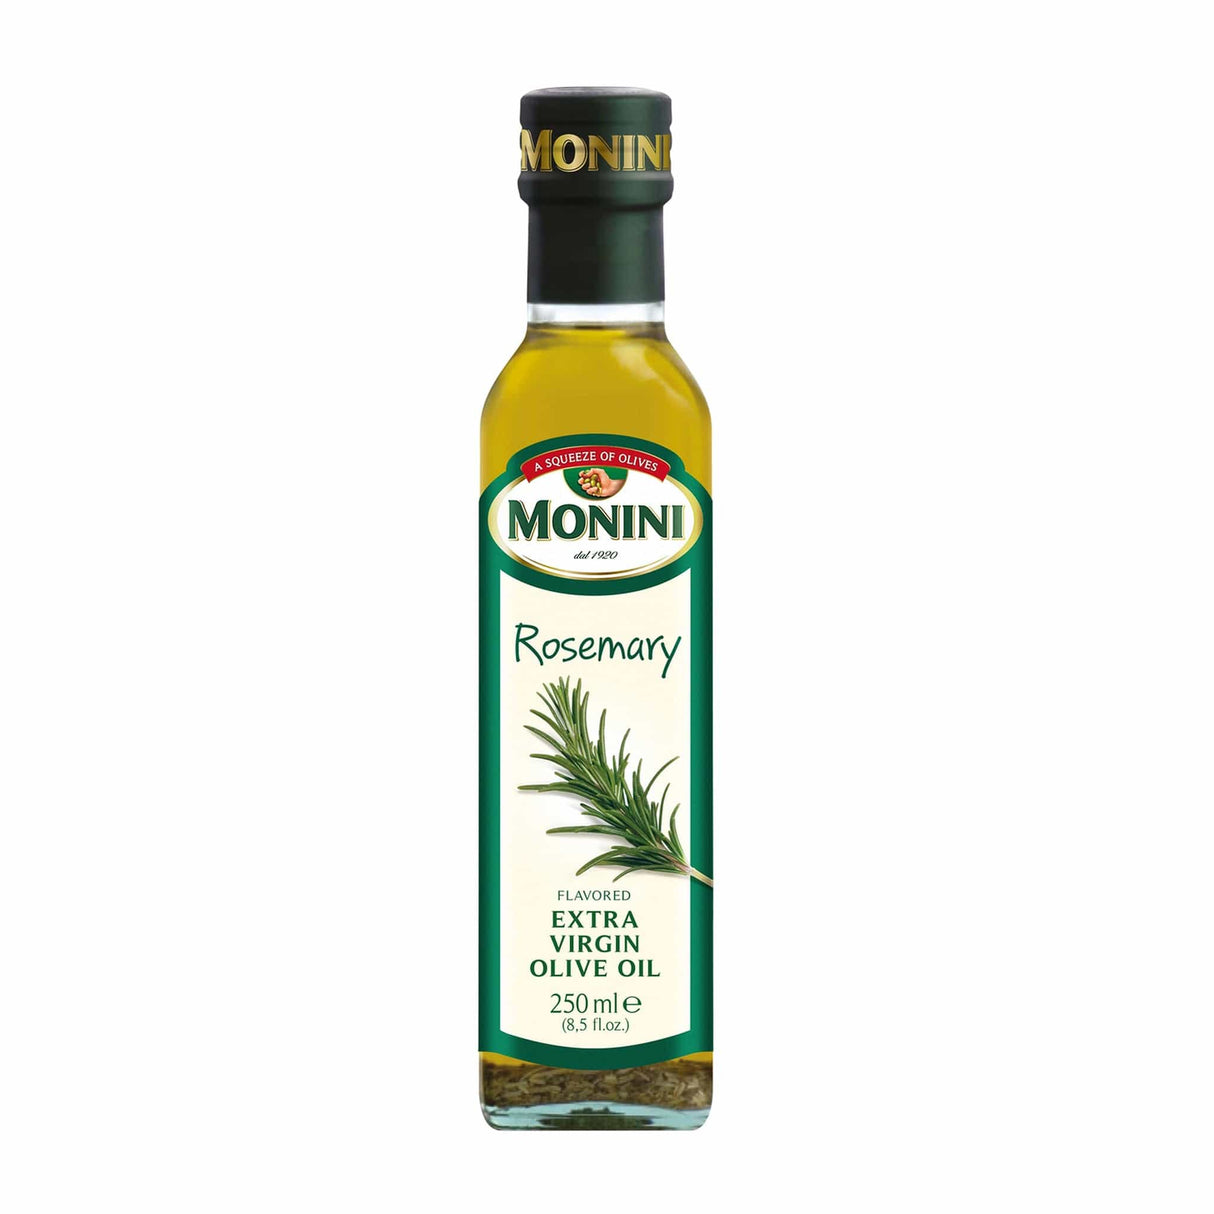 Monini Rosemary Flavored Extra Virgin Olive Oil